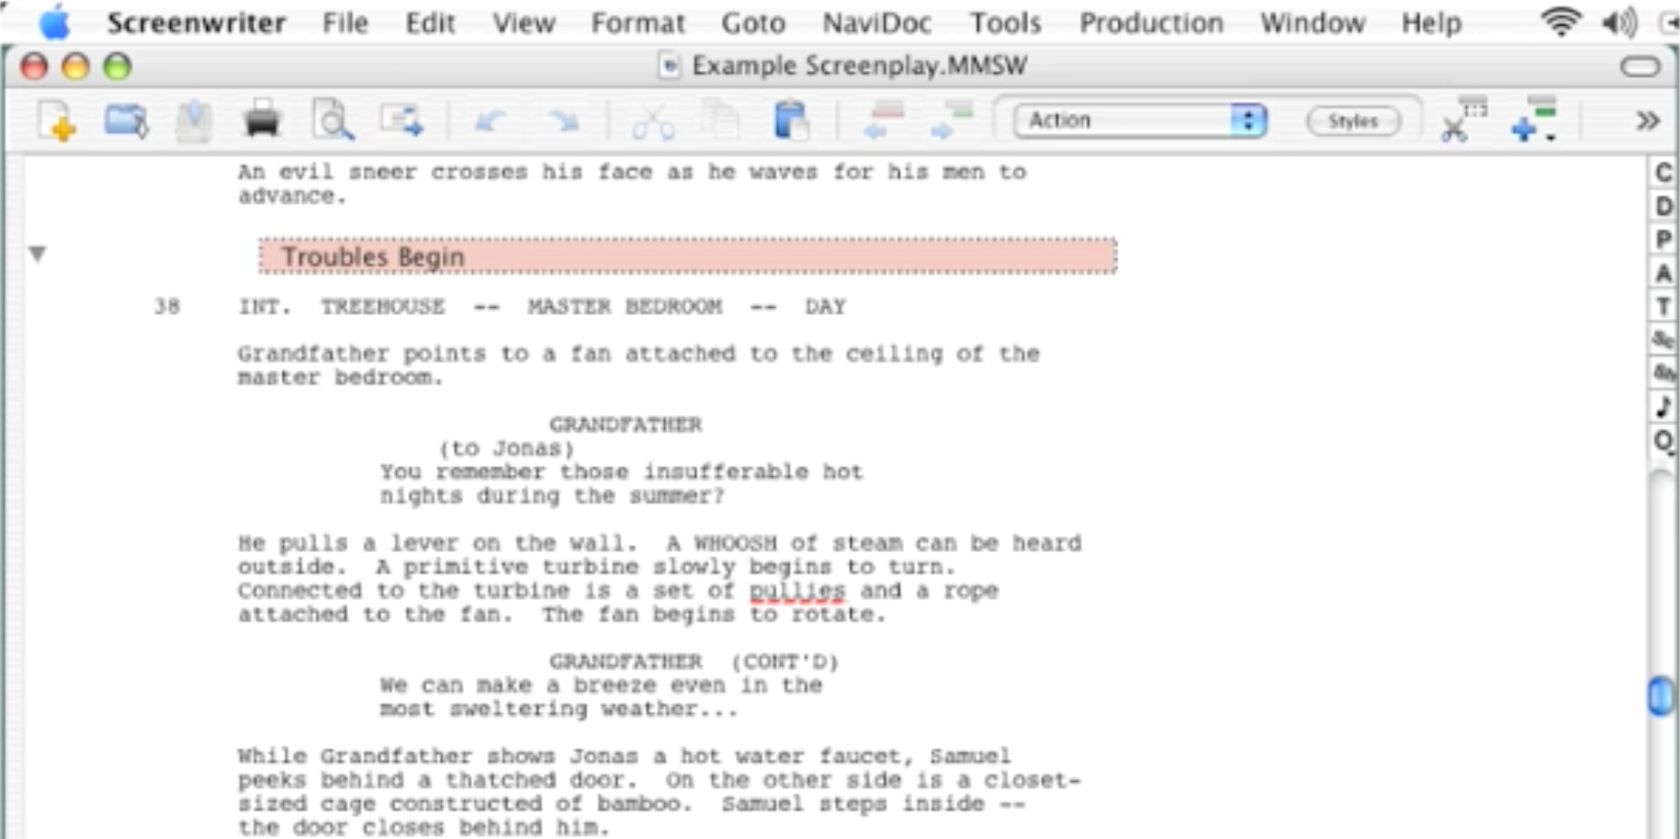 movie magic screenwriting software